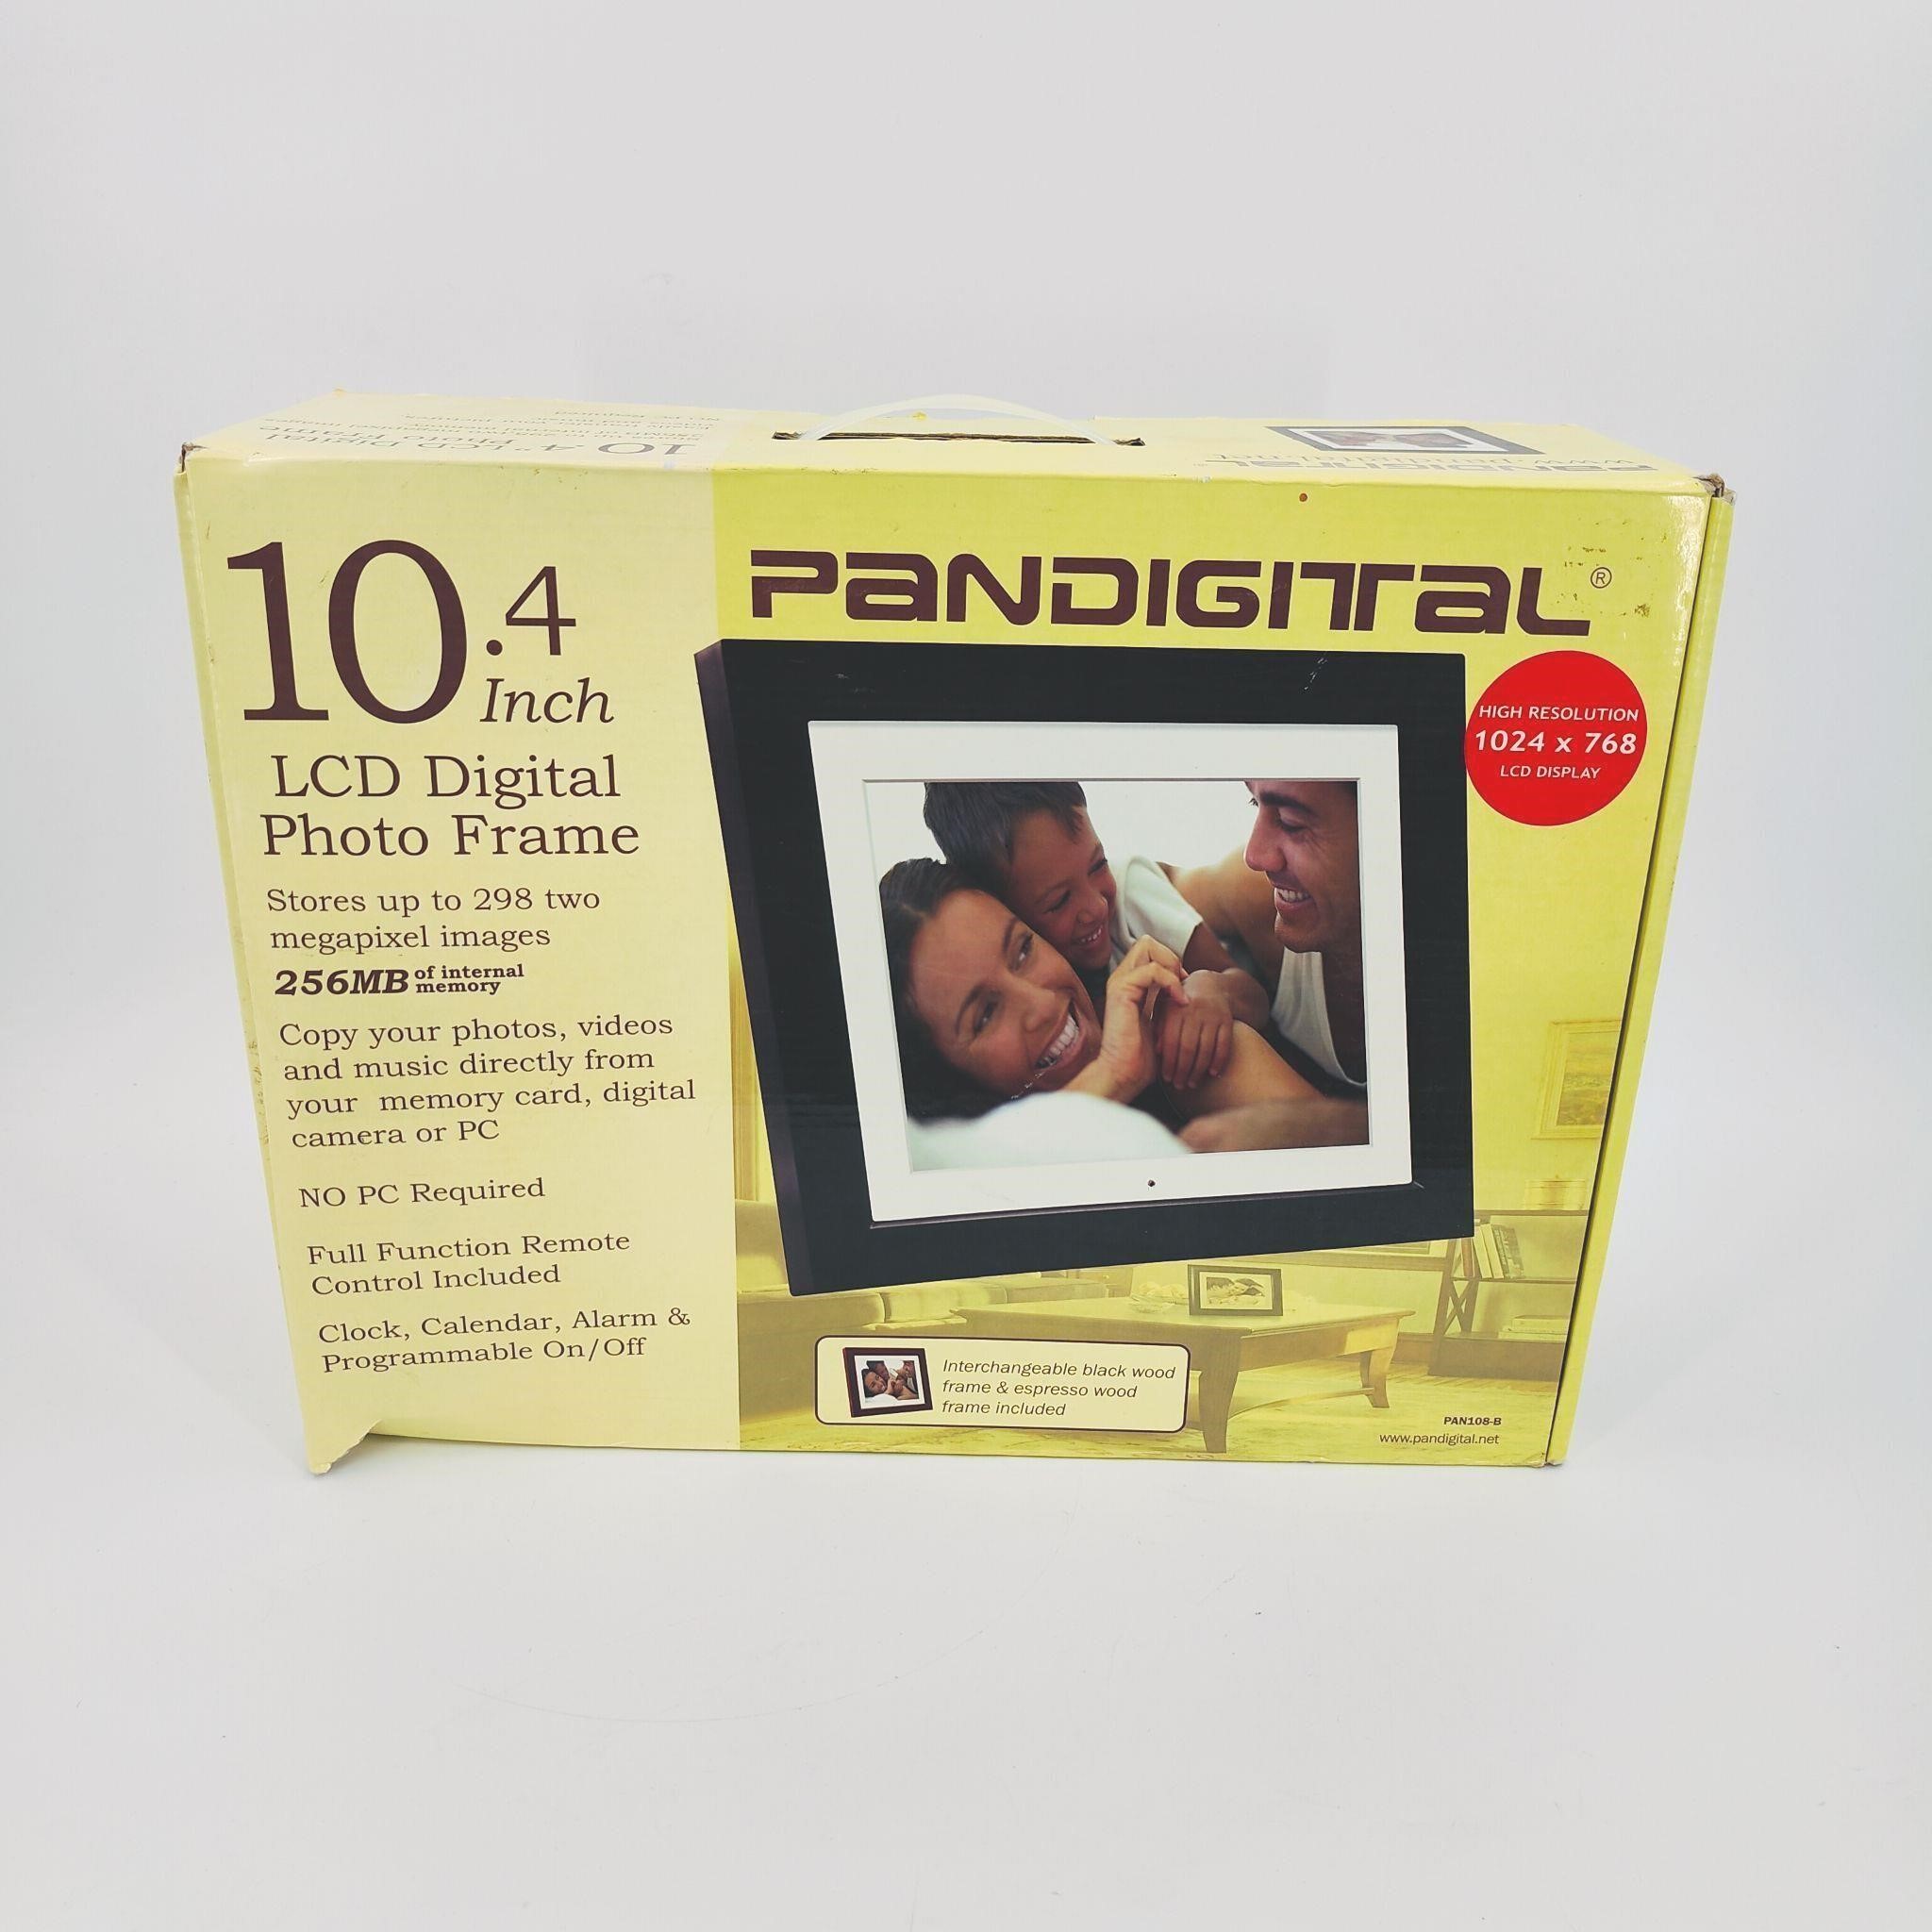 Pandigital 10.4 Inch LCD Digital Photo Frame